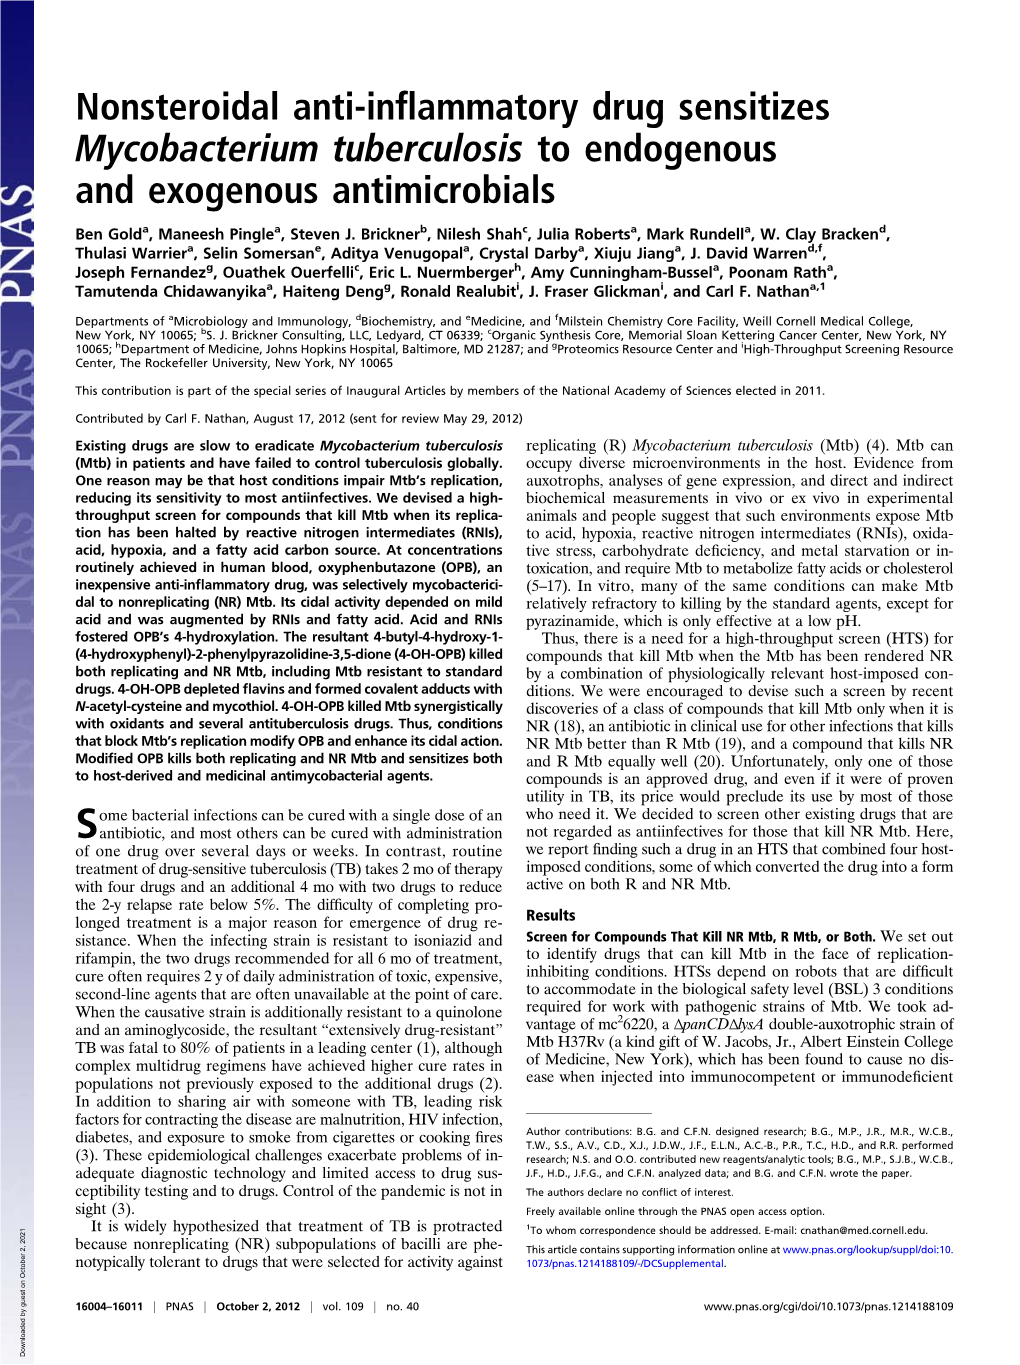 Nonsteroidal Anti-Inflammatory Drug Sensitizes Mycobacterium